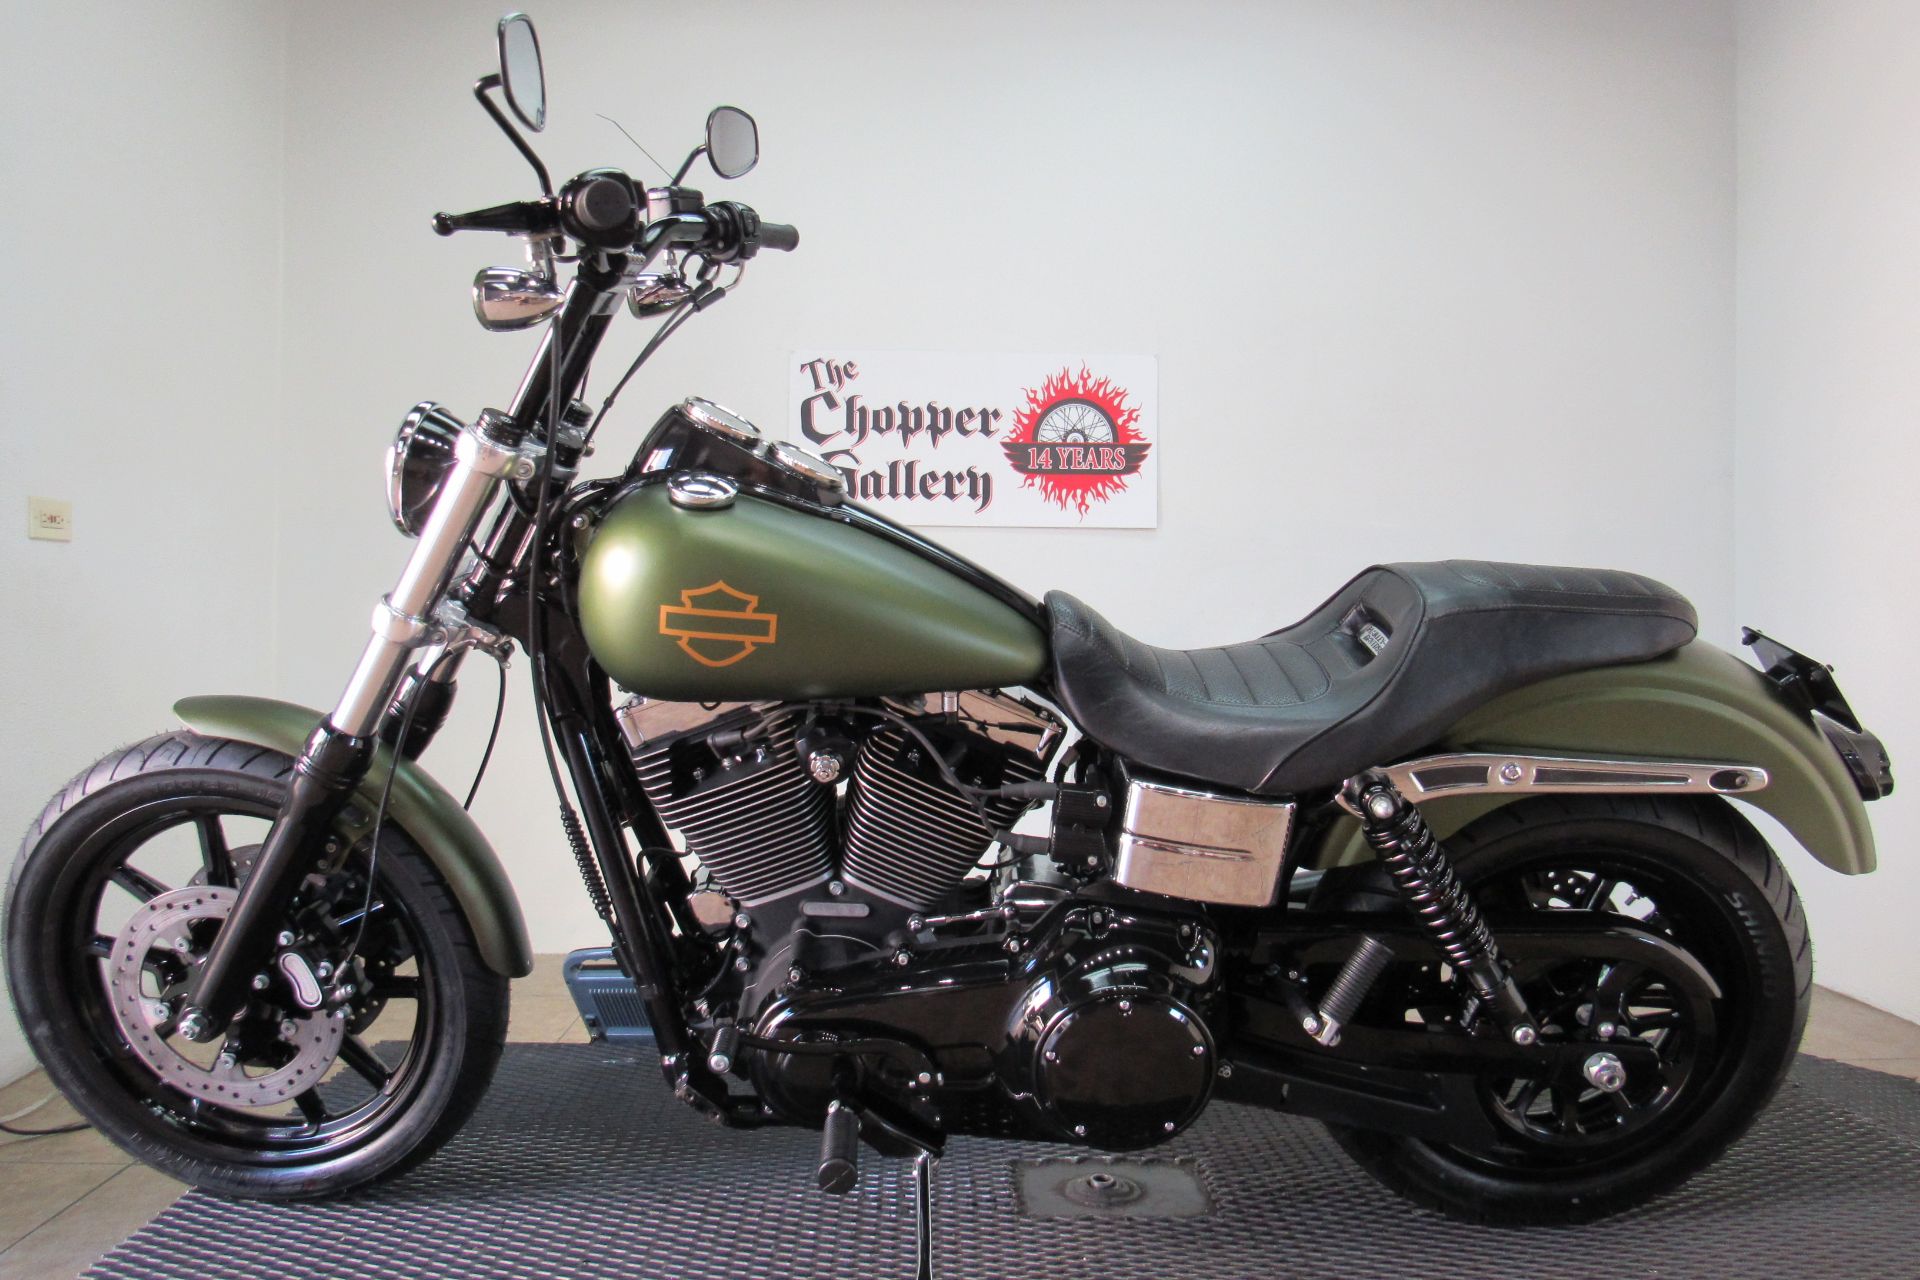 2014 Harley-Davidson Low Rider® in Temecula, California - Photo 2